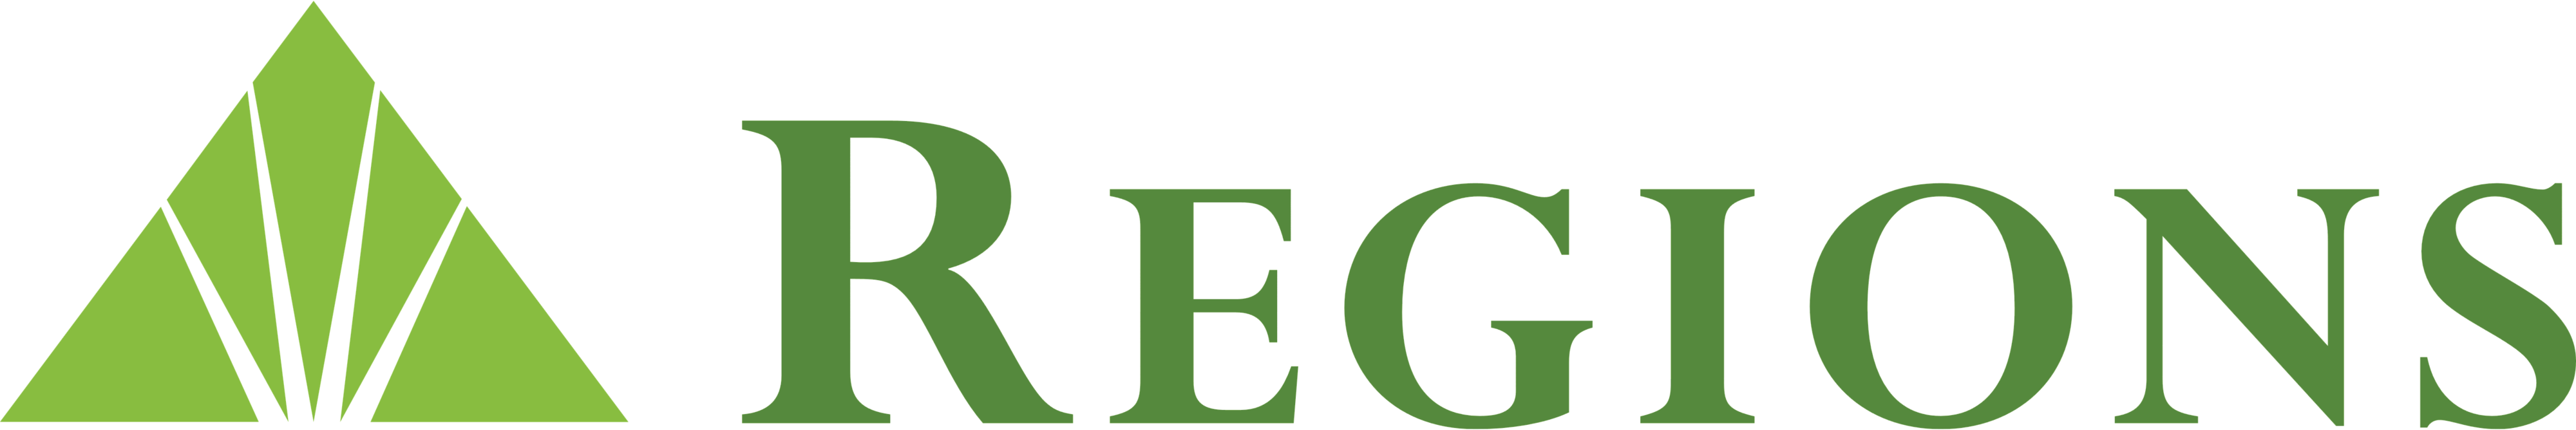 Region Banks Logo